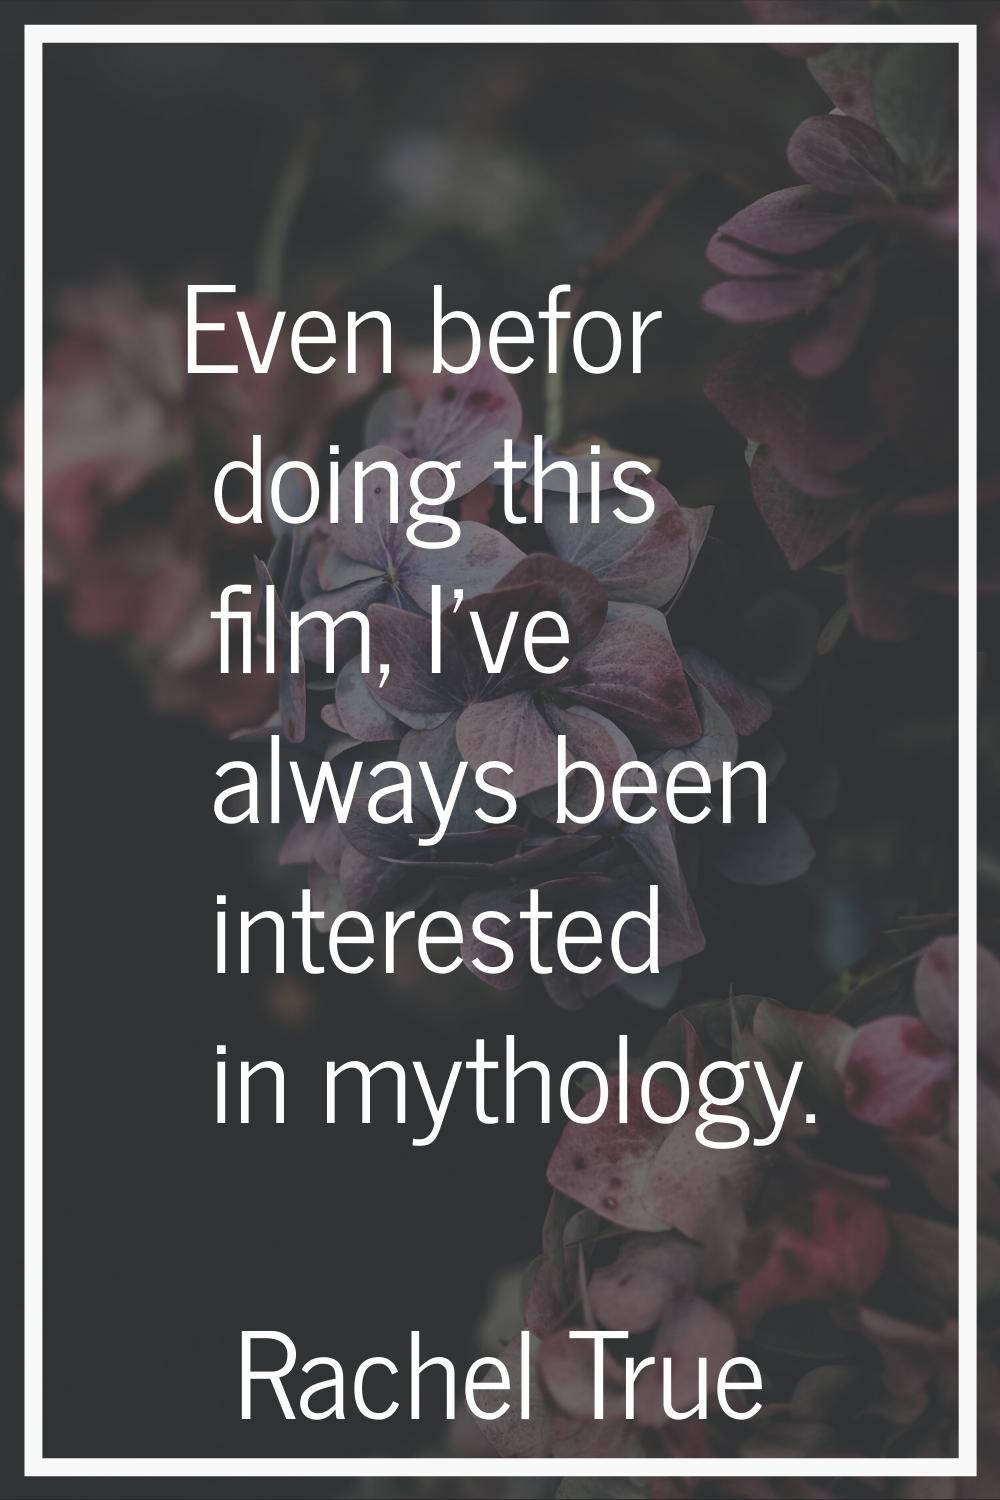 Even befor doing this film, I've always been interested in mythology.